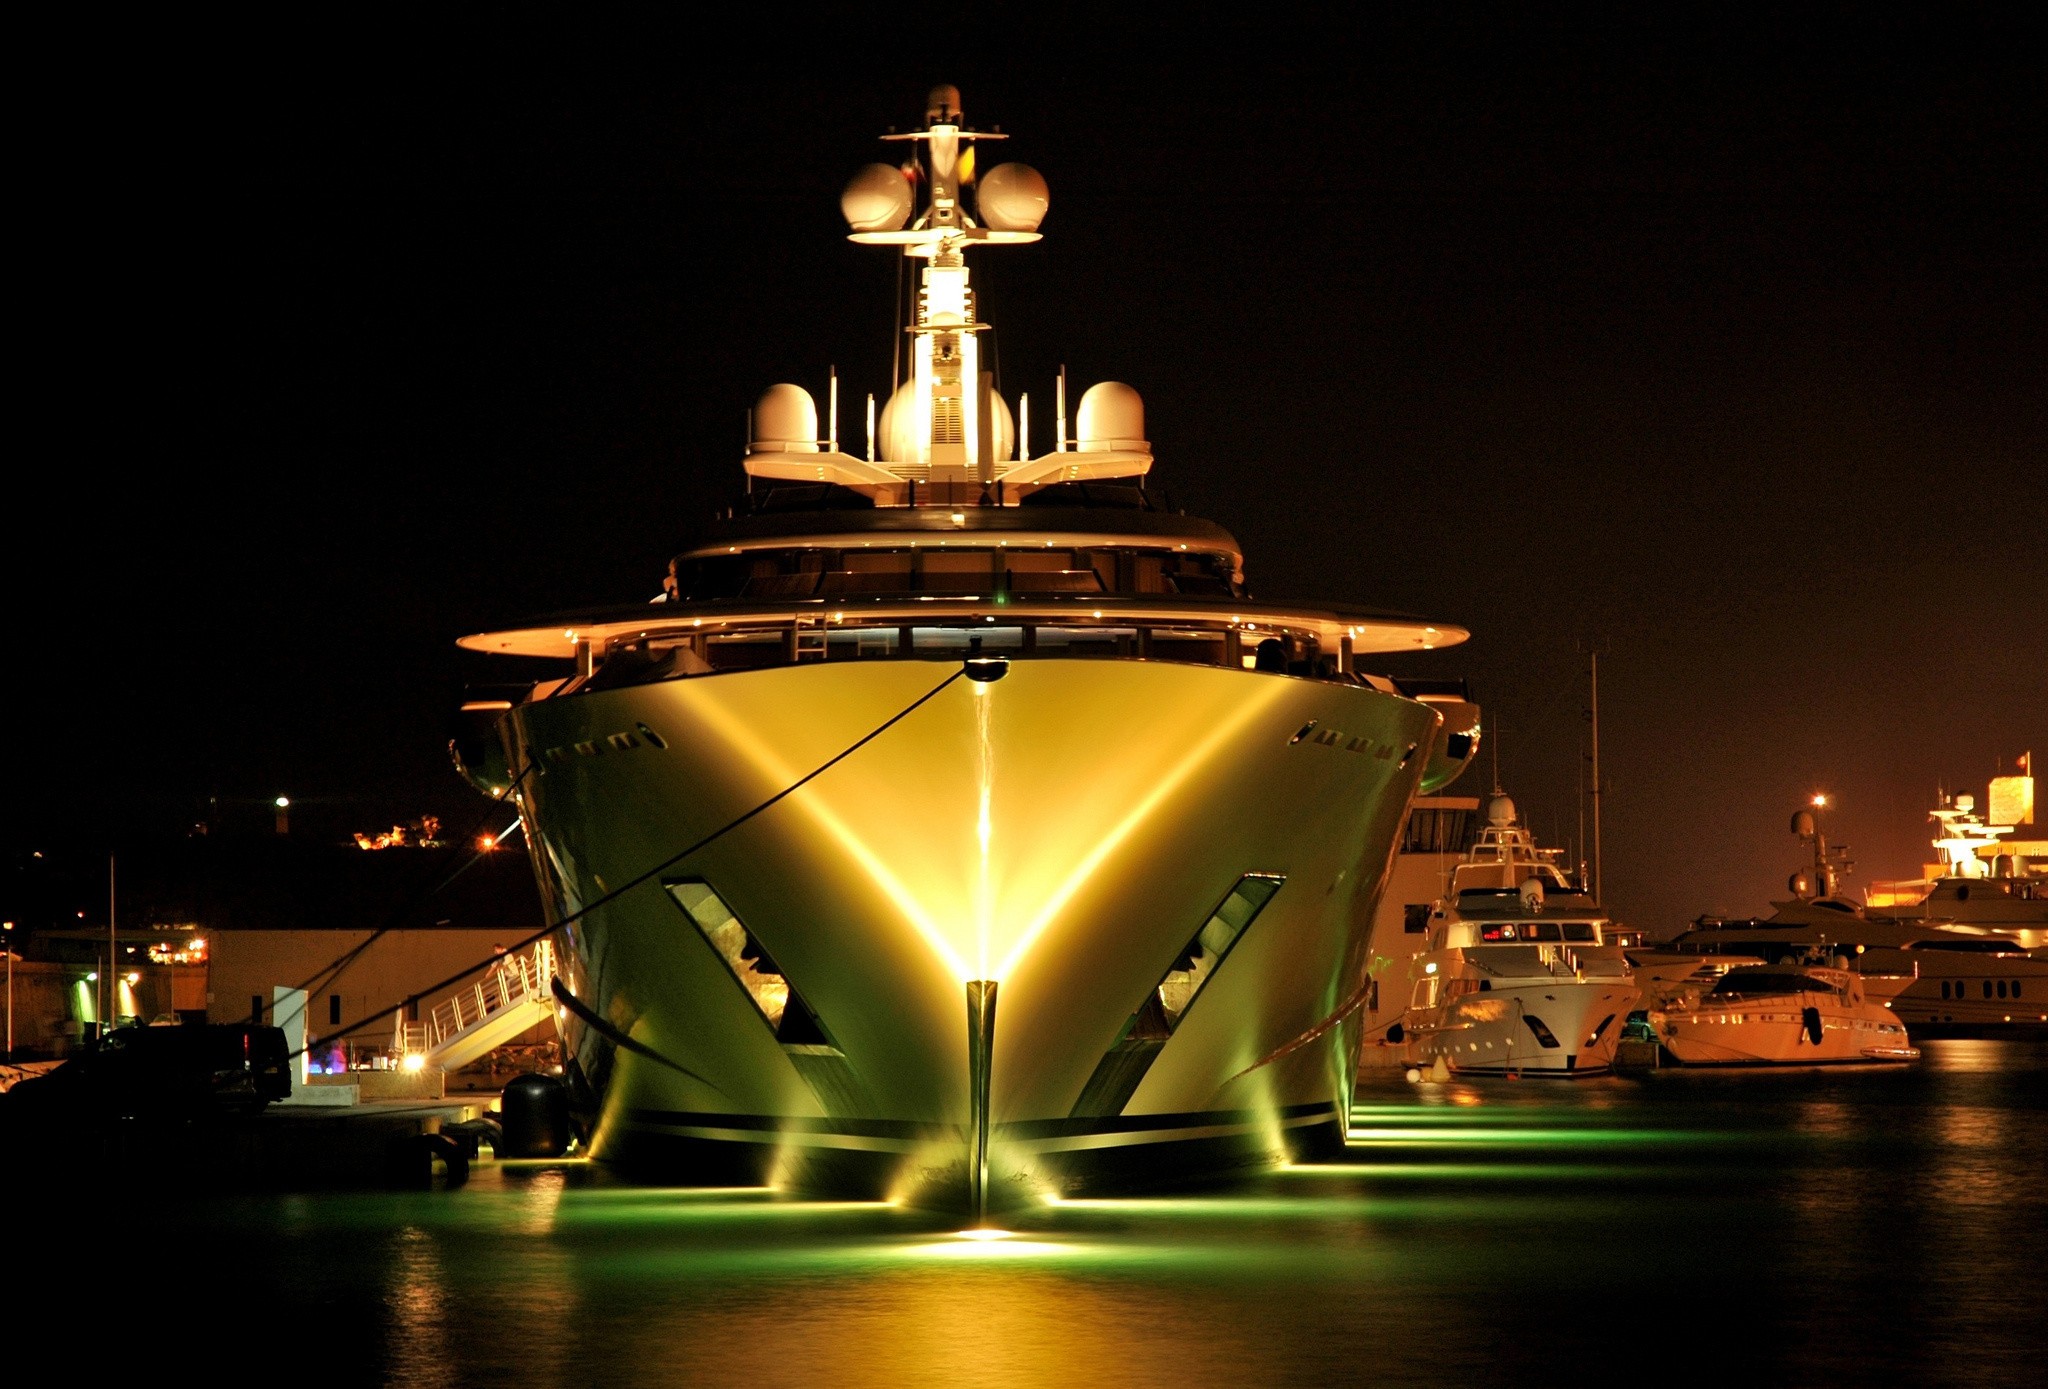 General 2048x1389 ship sea dock yacht night lights reflection long exposure vehicle harbor